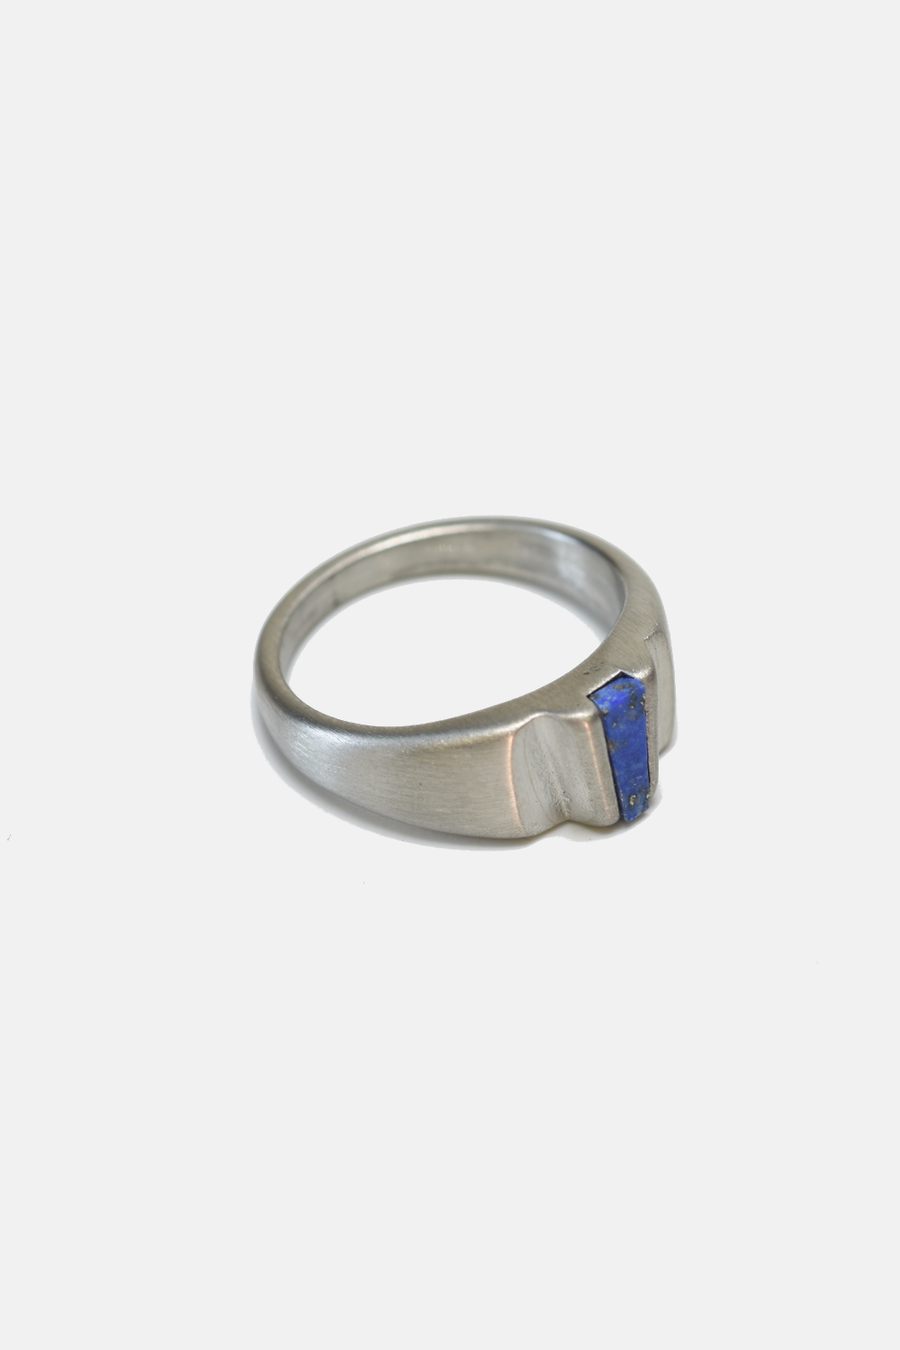 Lapis Lazuli Inlay Ring: 8